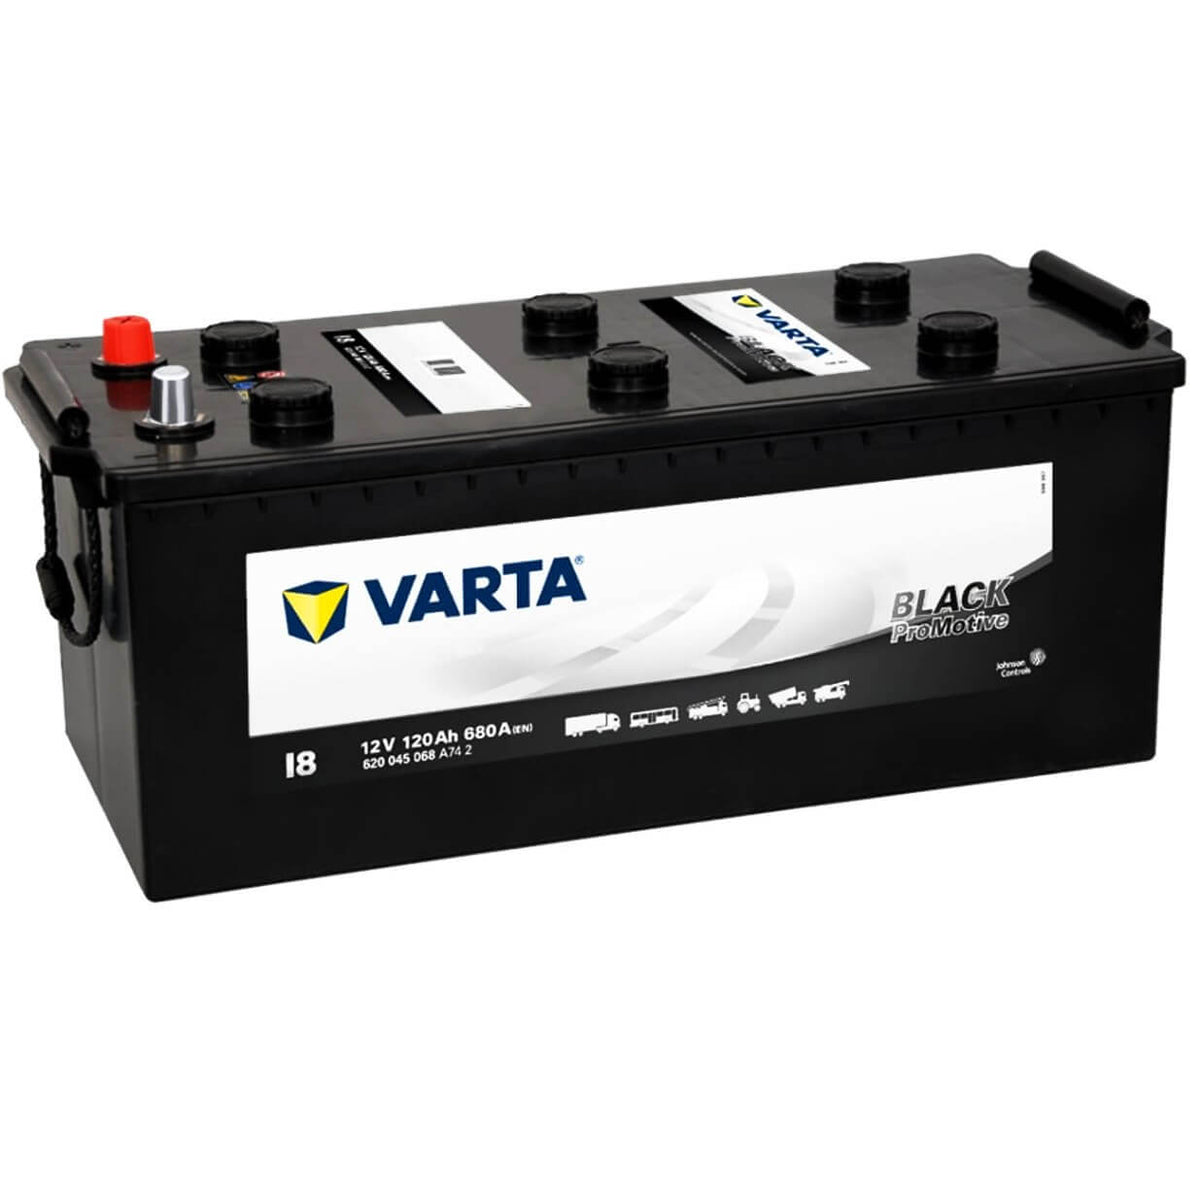 Varta I8 Promotive Black 12V 120Ah 680A/EN